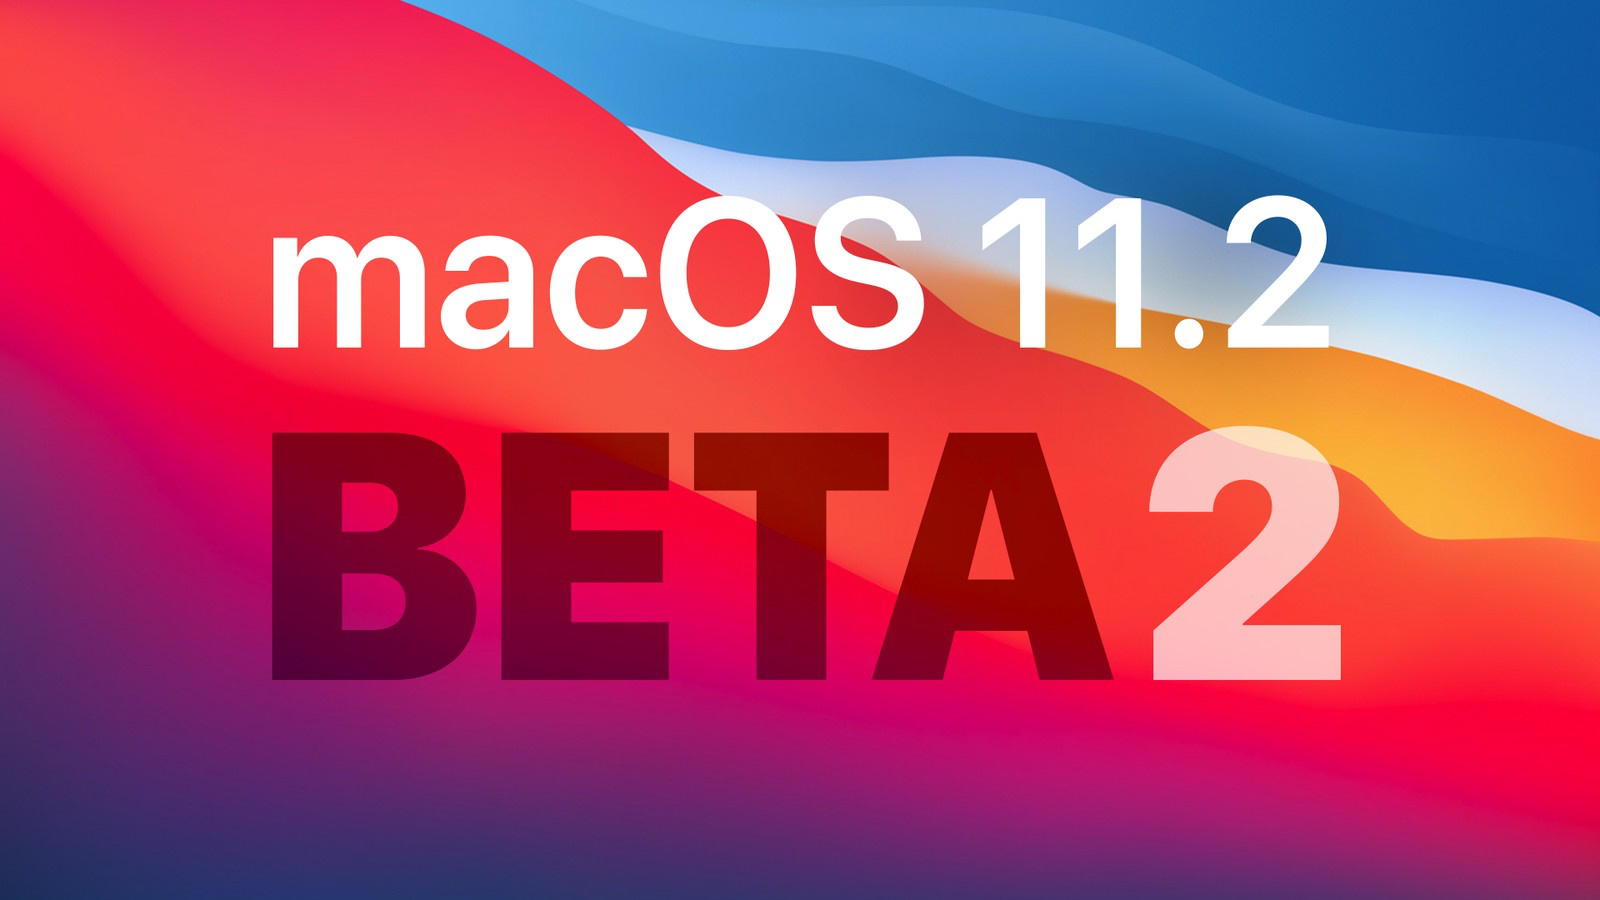 macOSBigSur11.2beta2更新了什么 macos11.4beta2